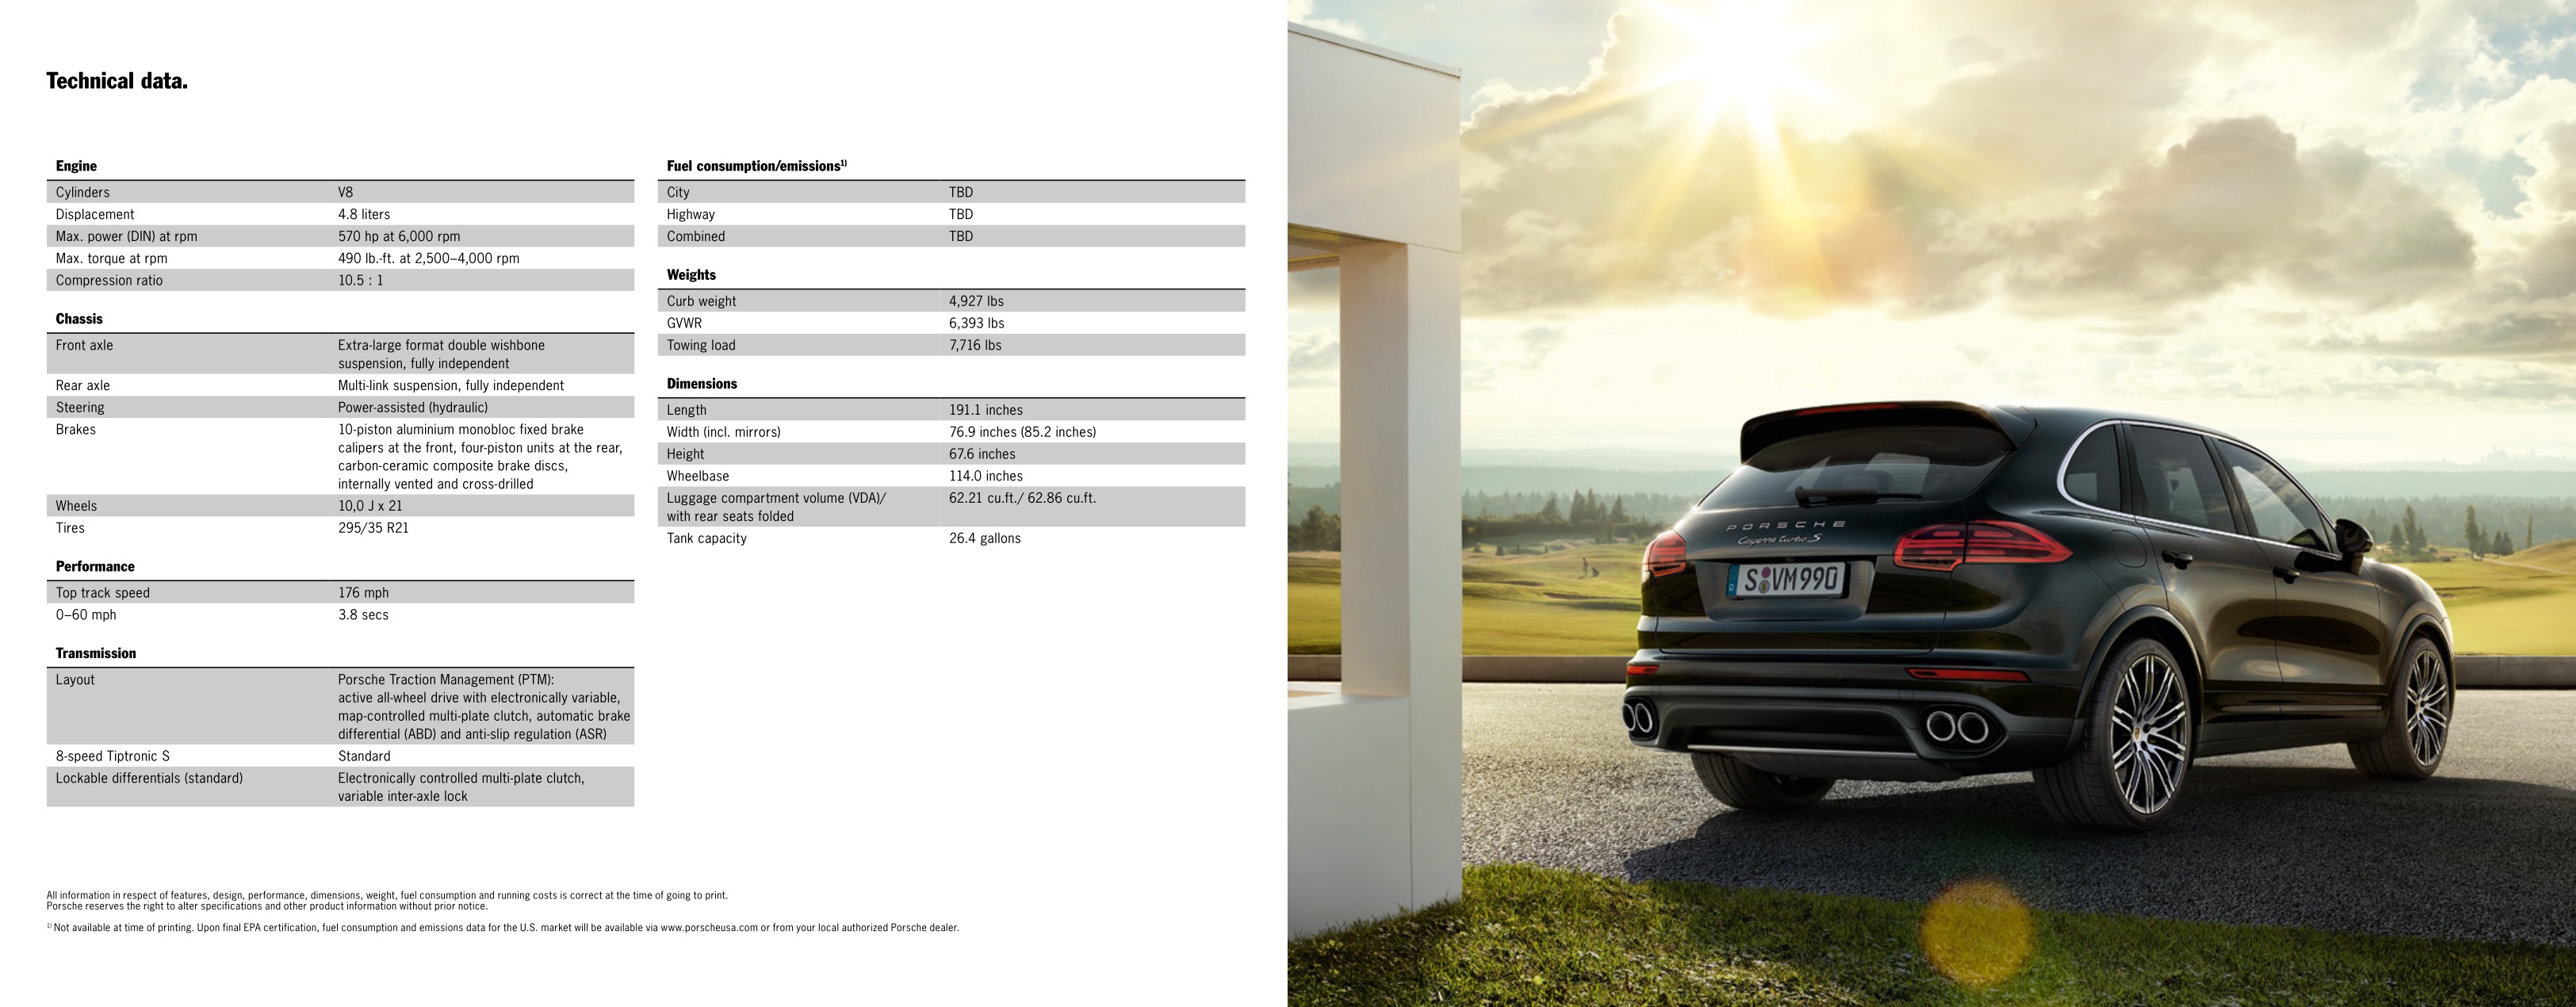 2015 Porsche Cayenne Turbo S Brochure Page 17